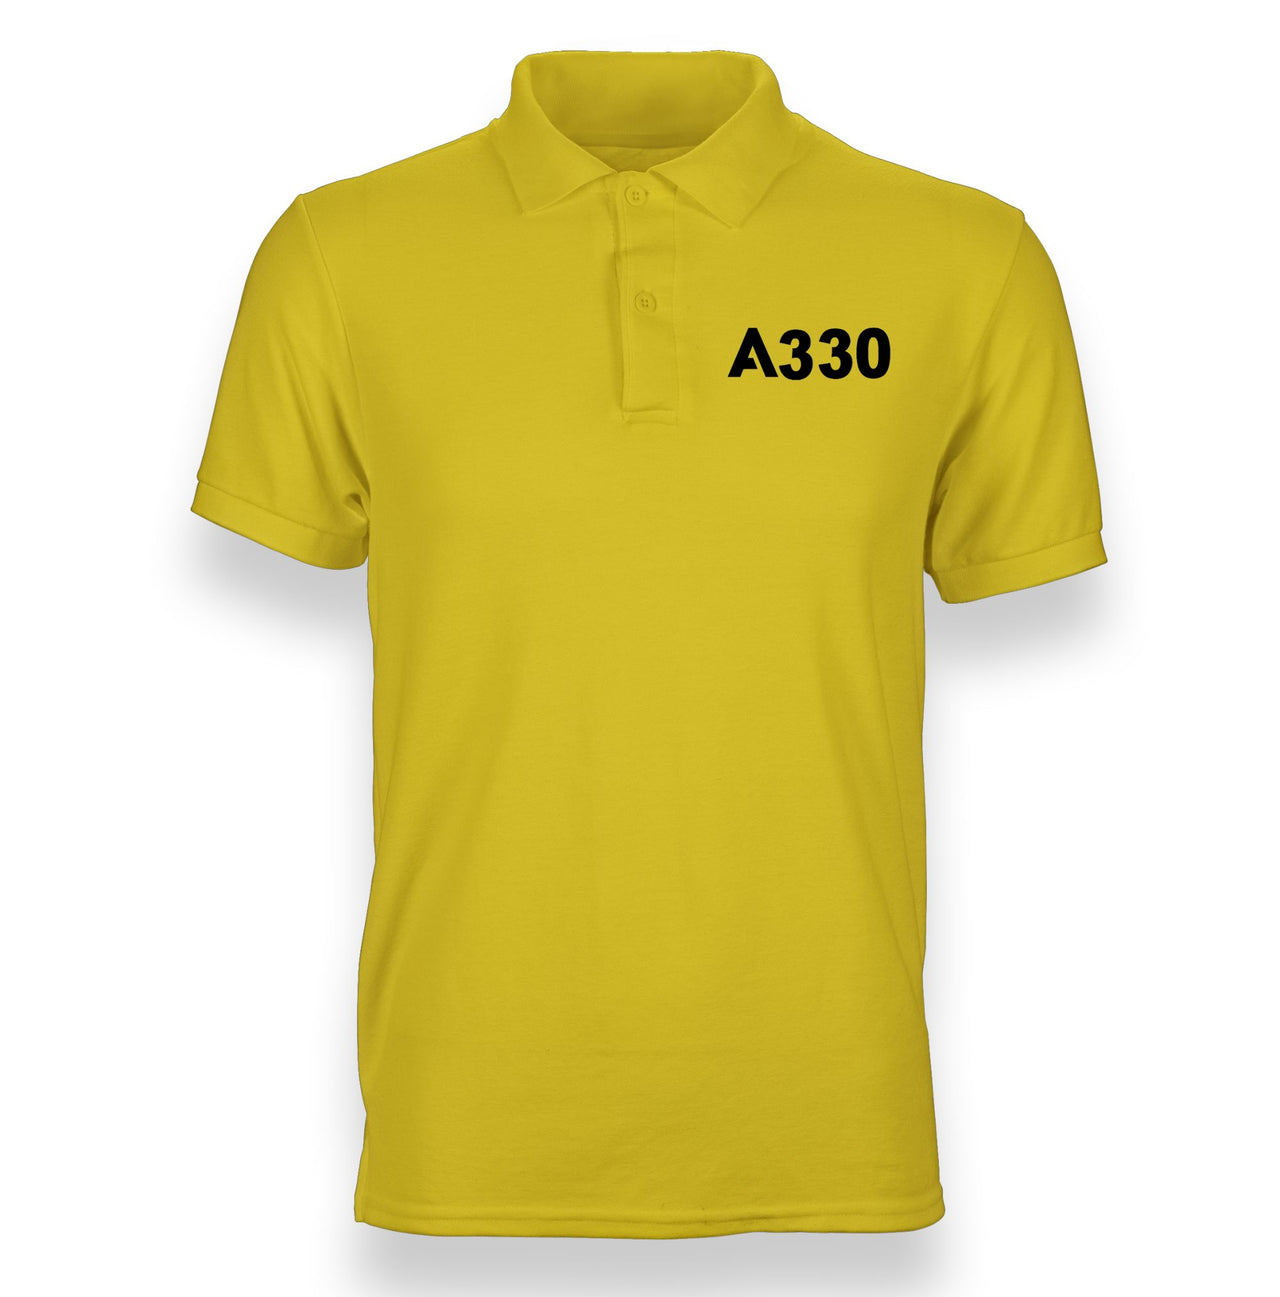 A330 Flat Text Designed "WOMEN" Polo T-Shirts